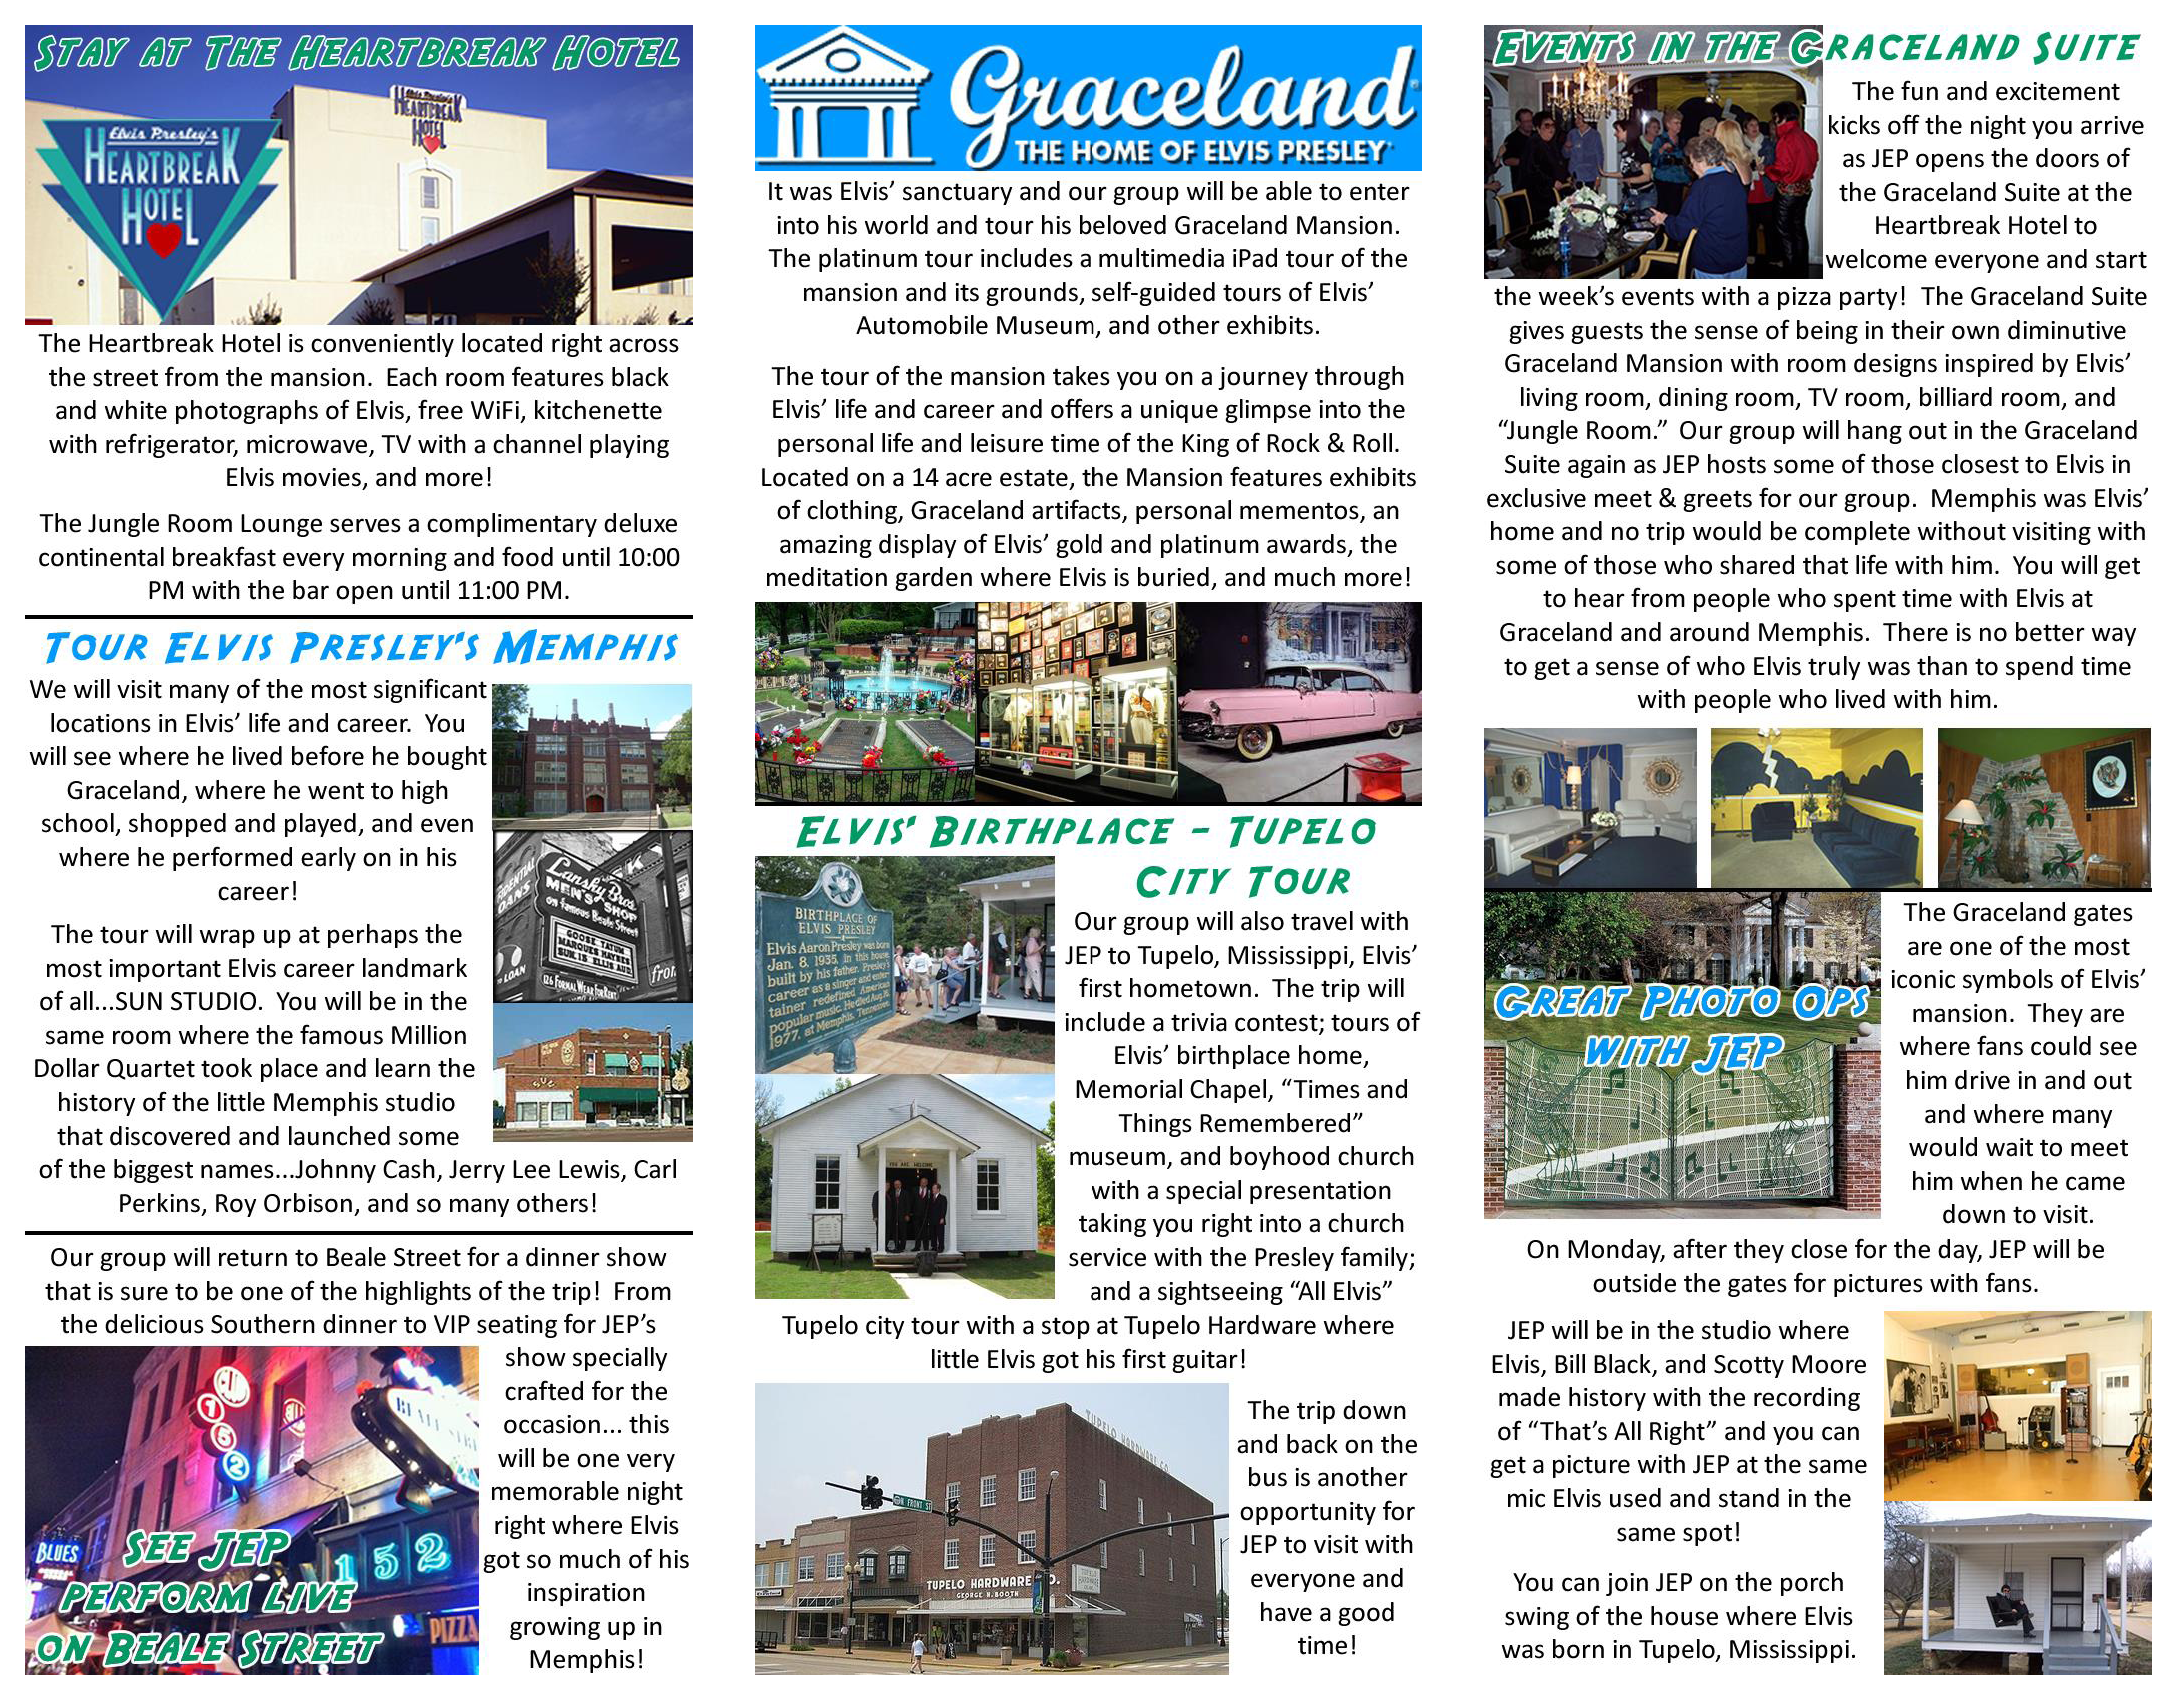 Graceland brochure 2